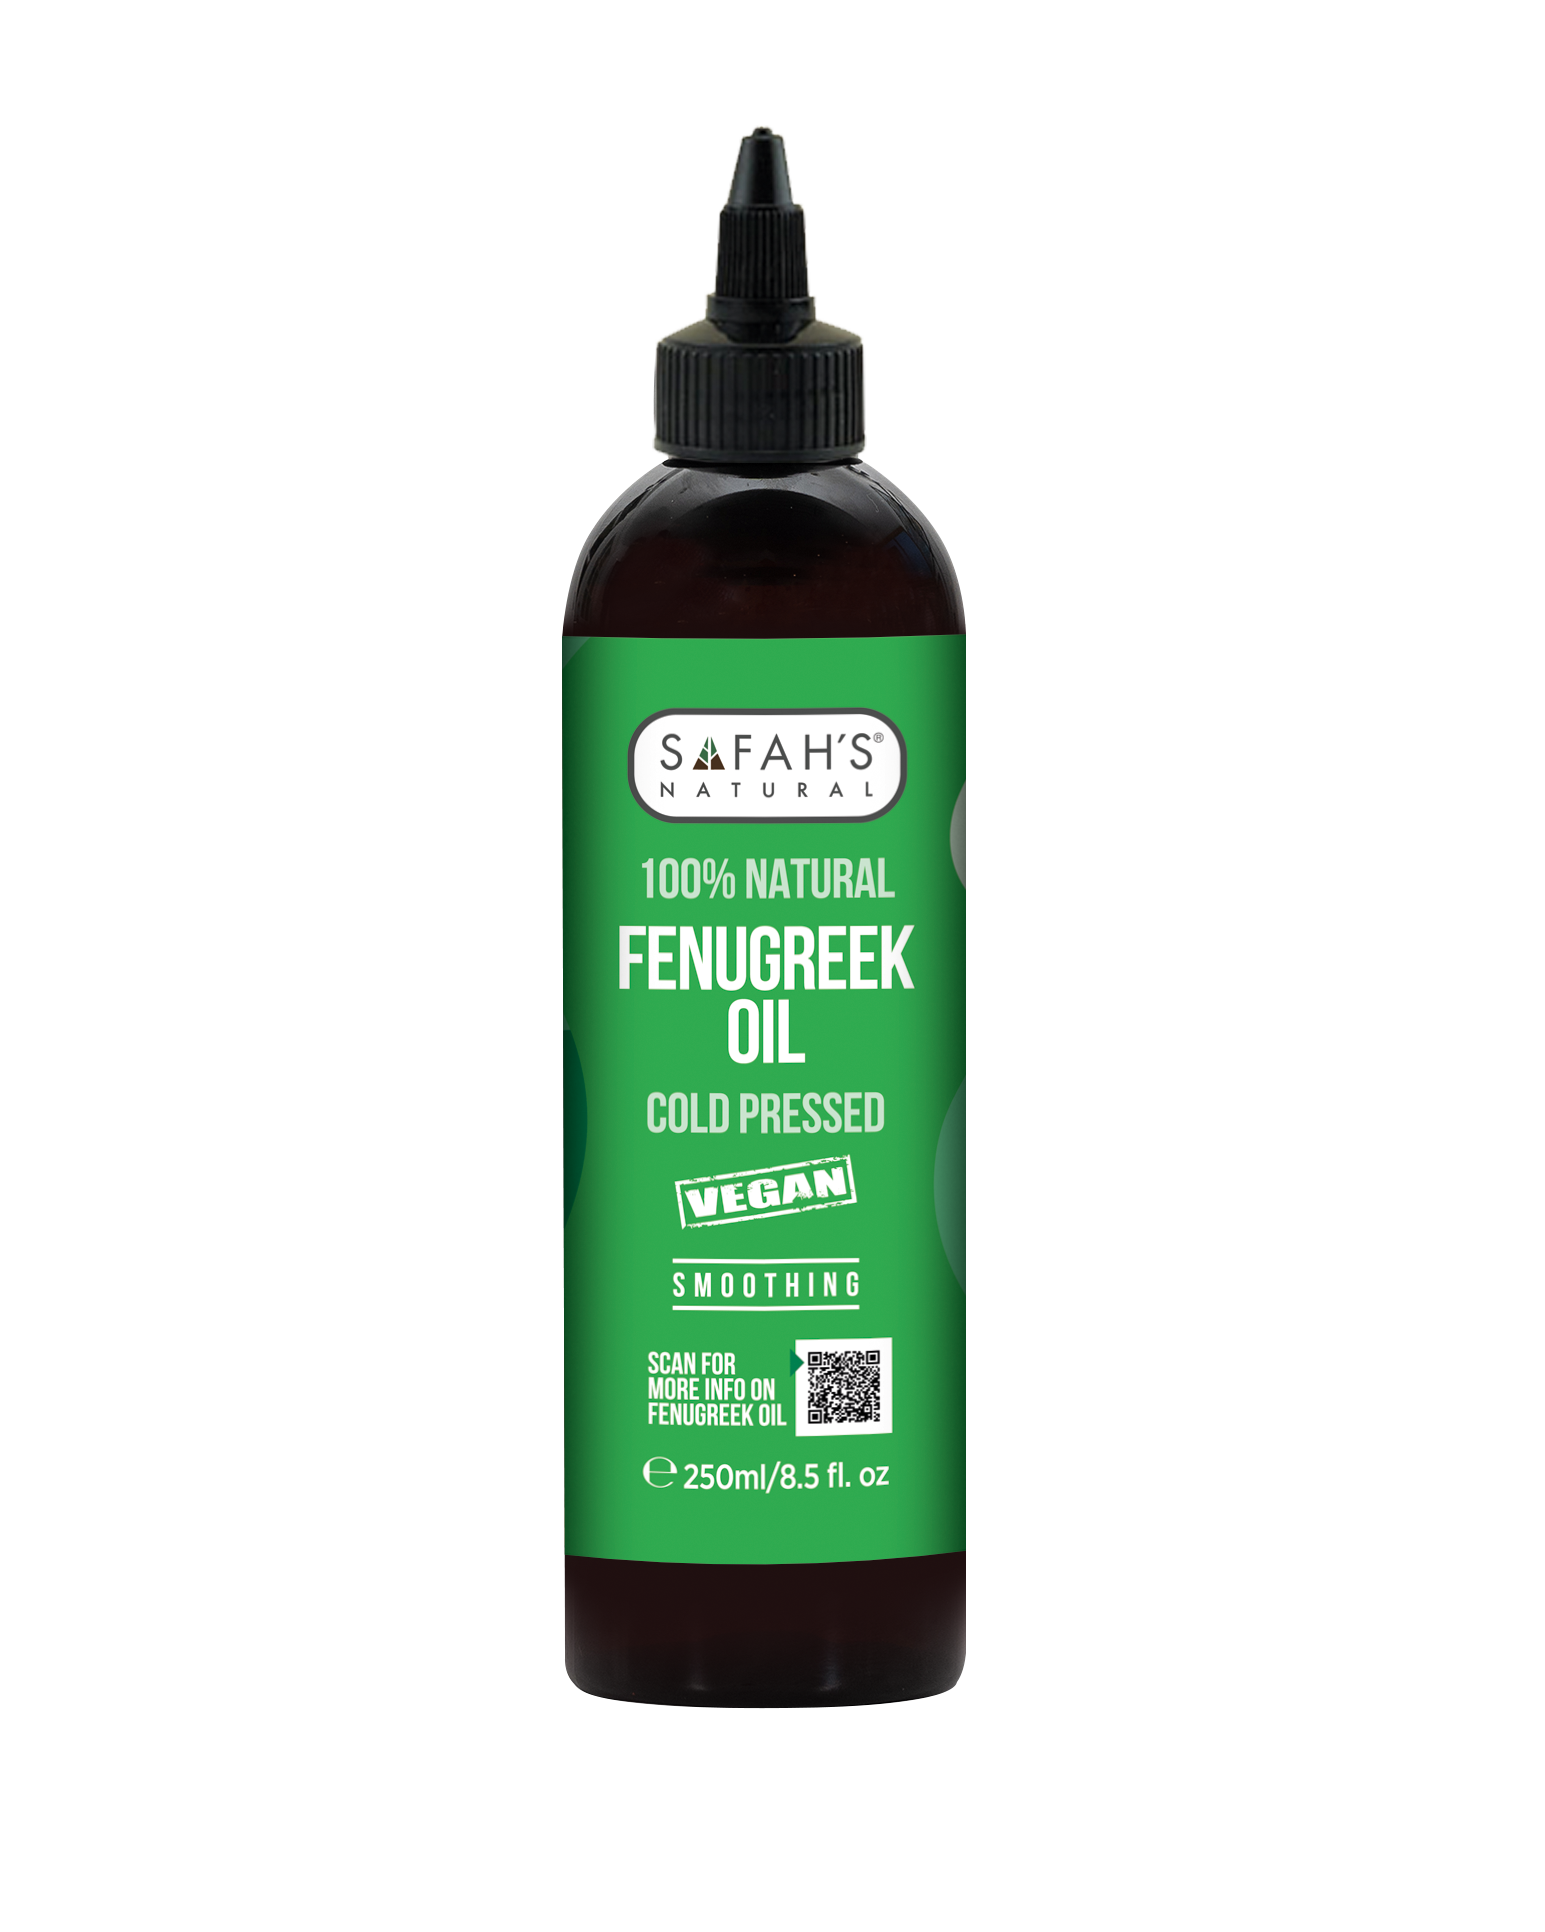 Fenugreek oil - Natural Anti Aging and Moisturizing Oil